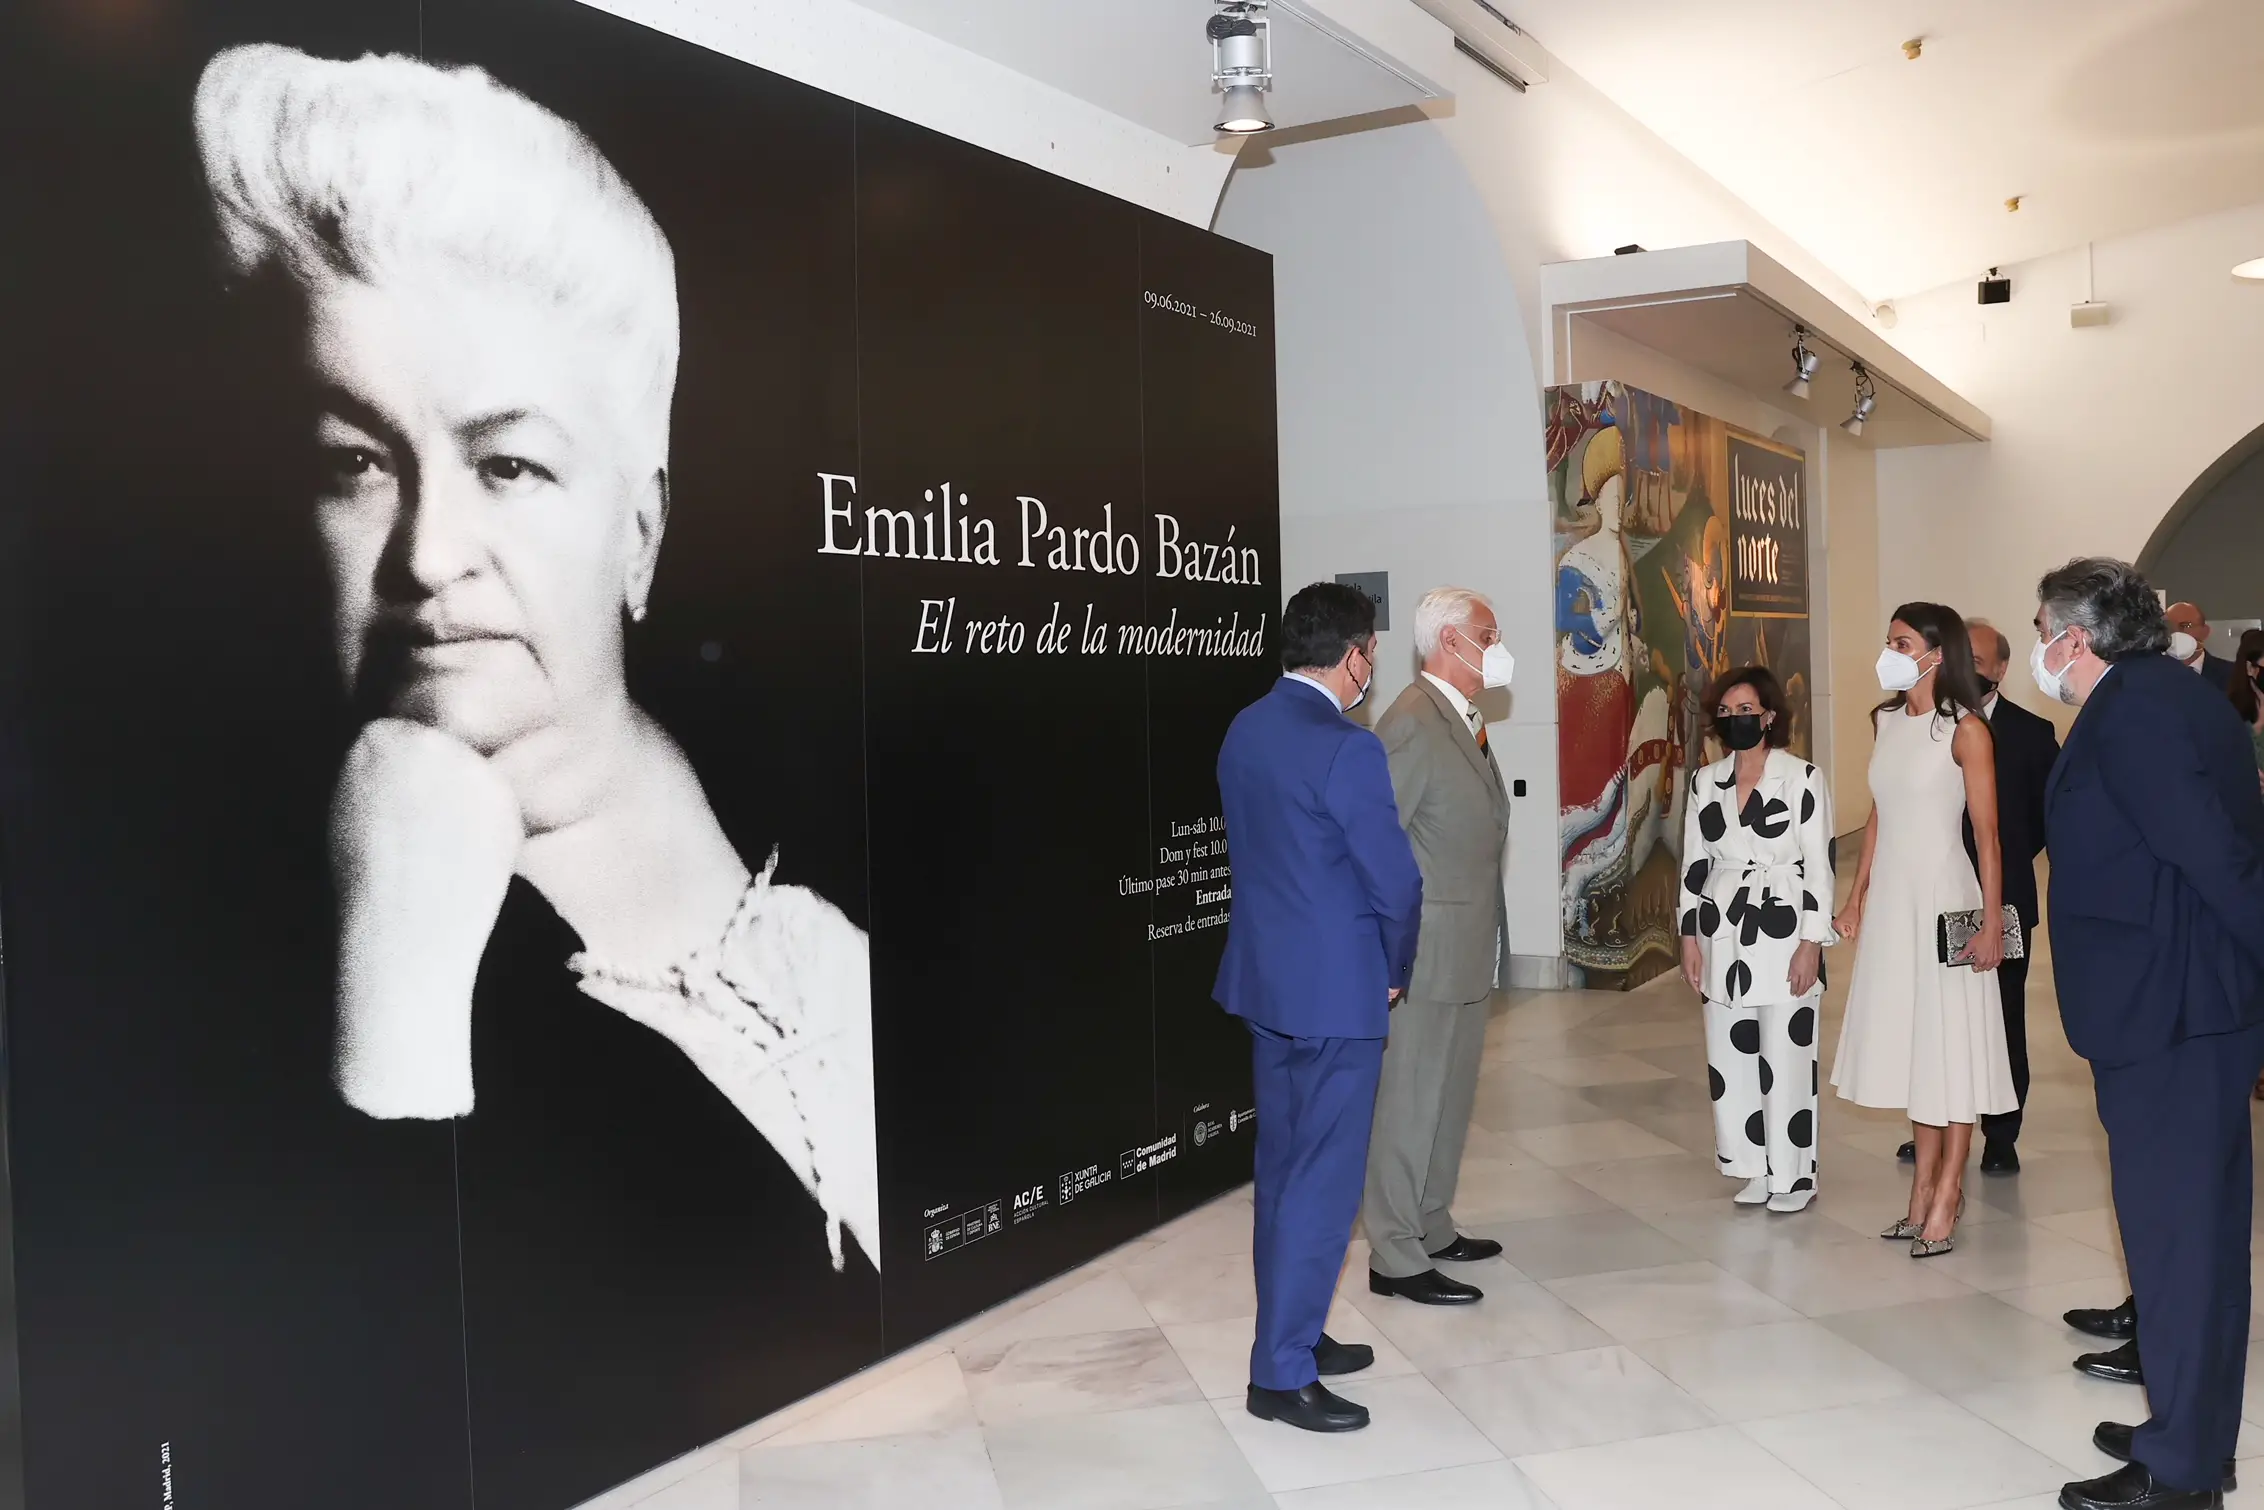 Queen Letizia attended the "Emilia Pardo Bazán. The challenge of modernity" exhibition